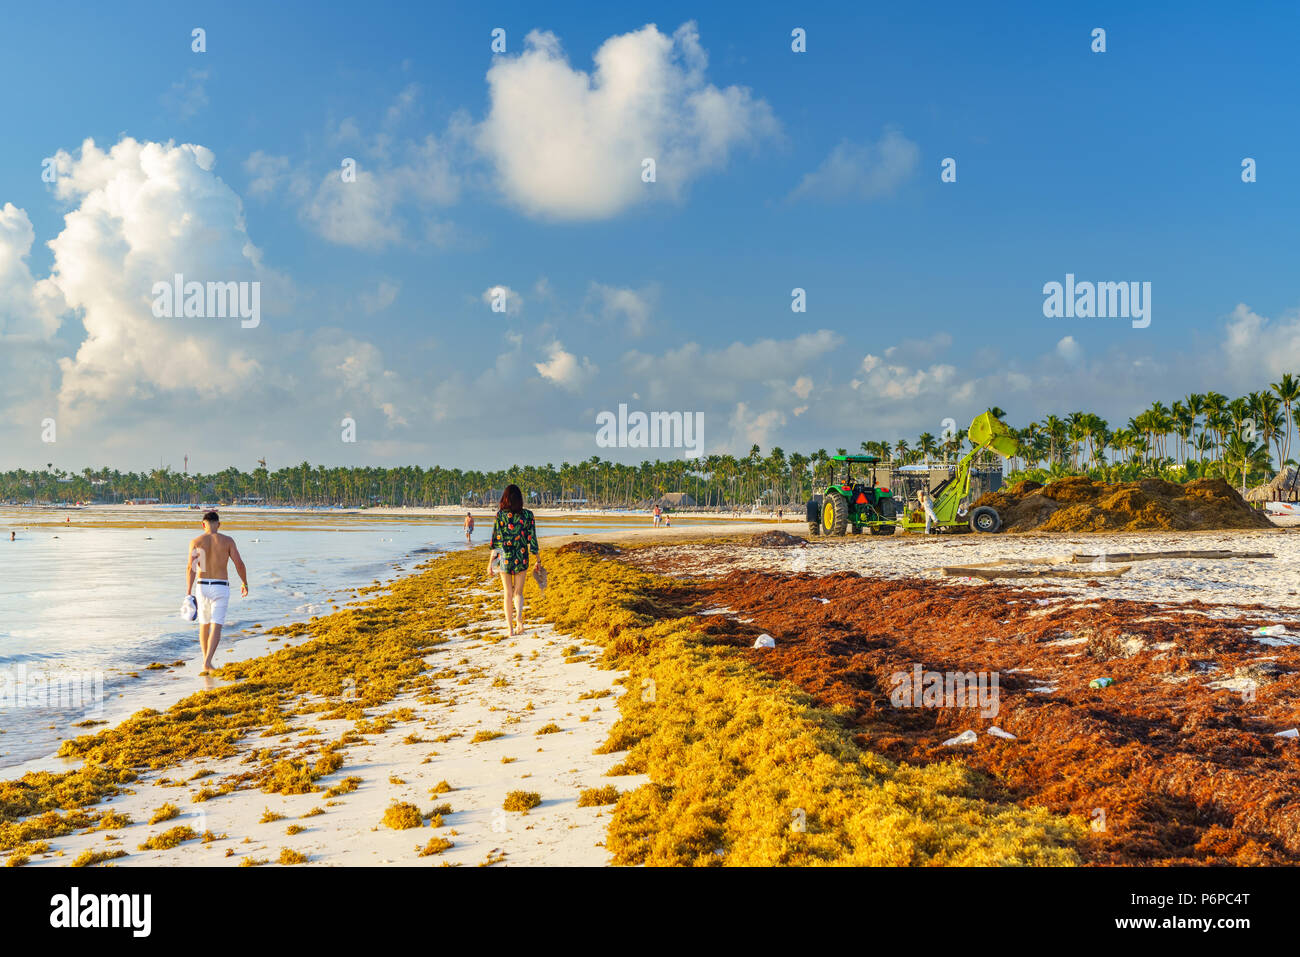 Punta Cana, Dominikanische Republik - 19. Juni 2018: sargassum Algen auf dem beaytiful Ocean Beach in Playa Bavaro, Punta Cana, das Ergebnis der globalen Erwärmung Klimawandel. Stockfoto